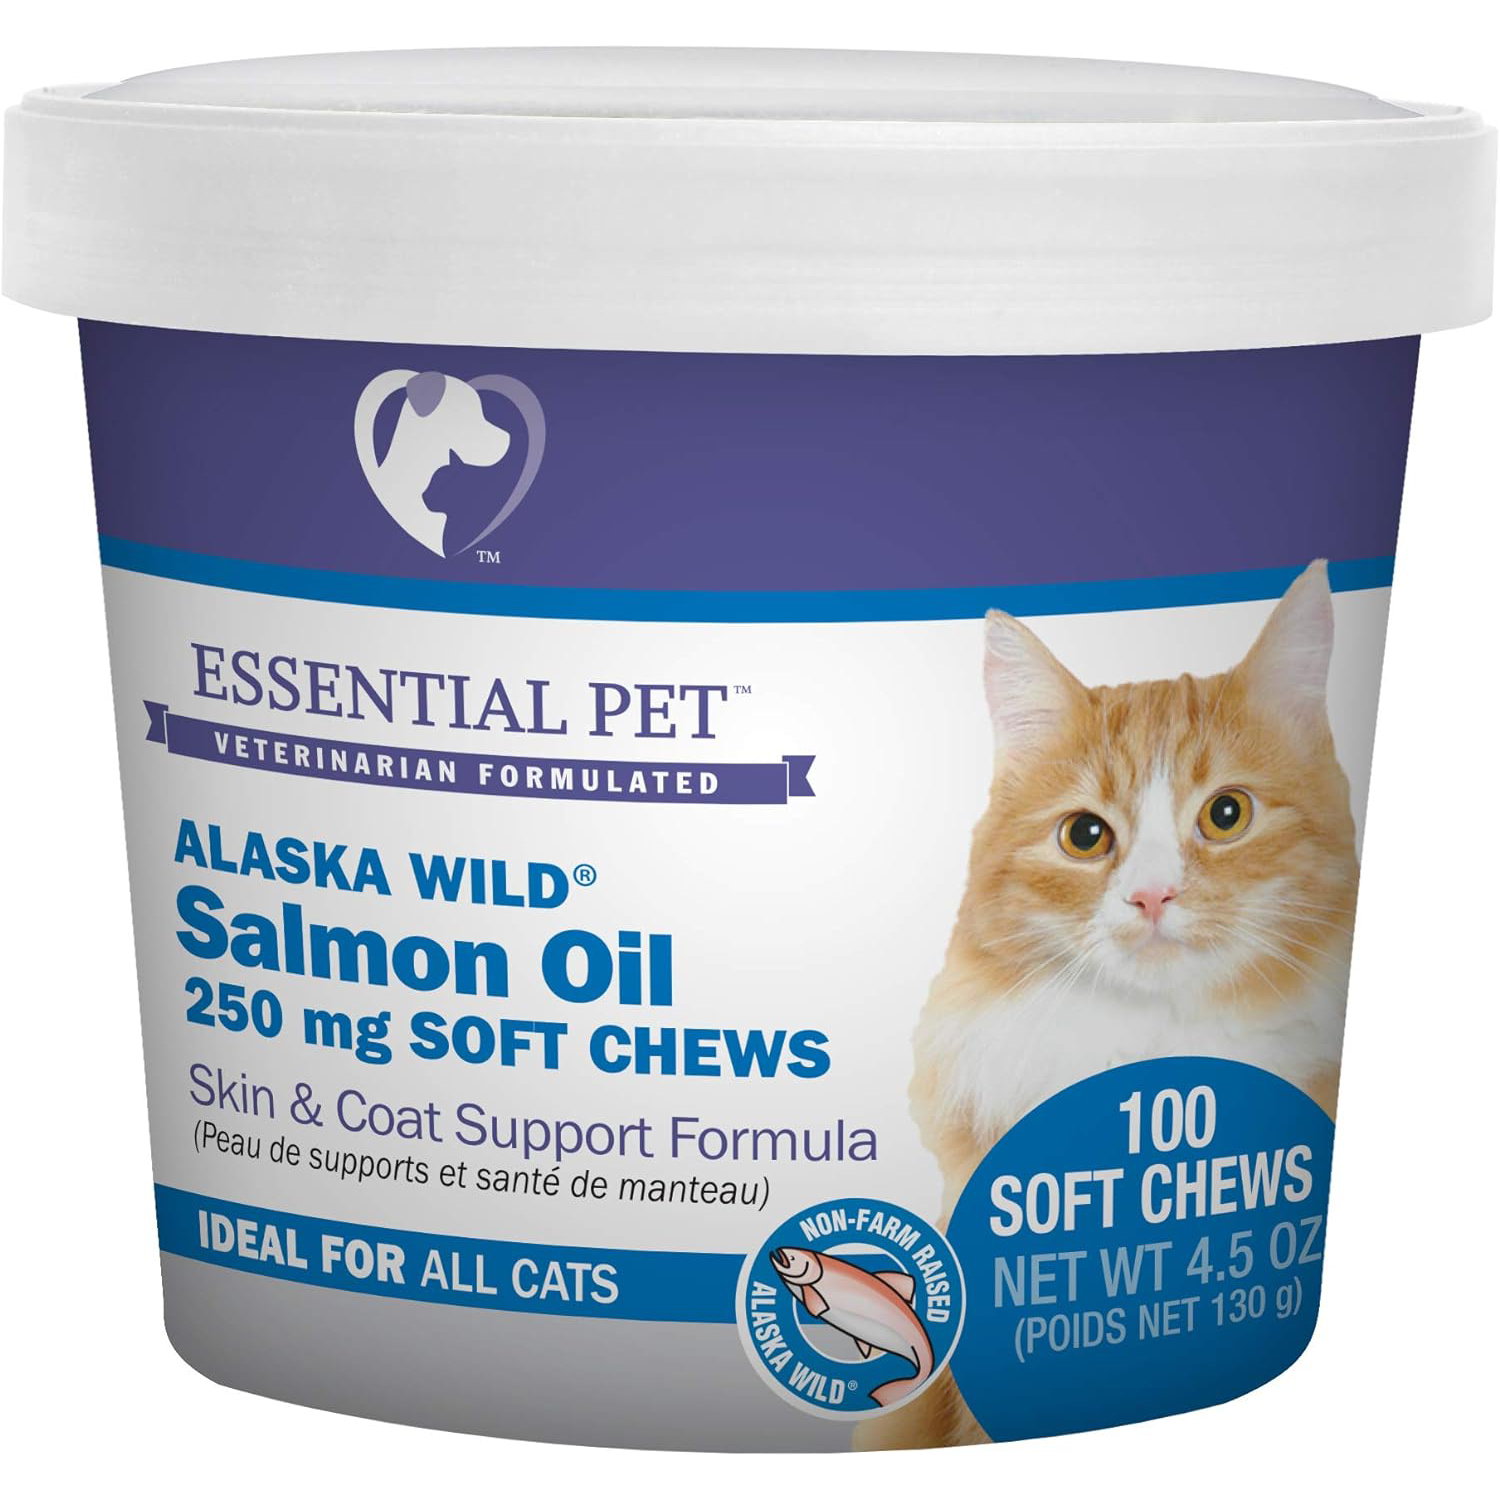 21st Century Essential Pet Alaska Wild Salmon Oil Soft Chews